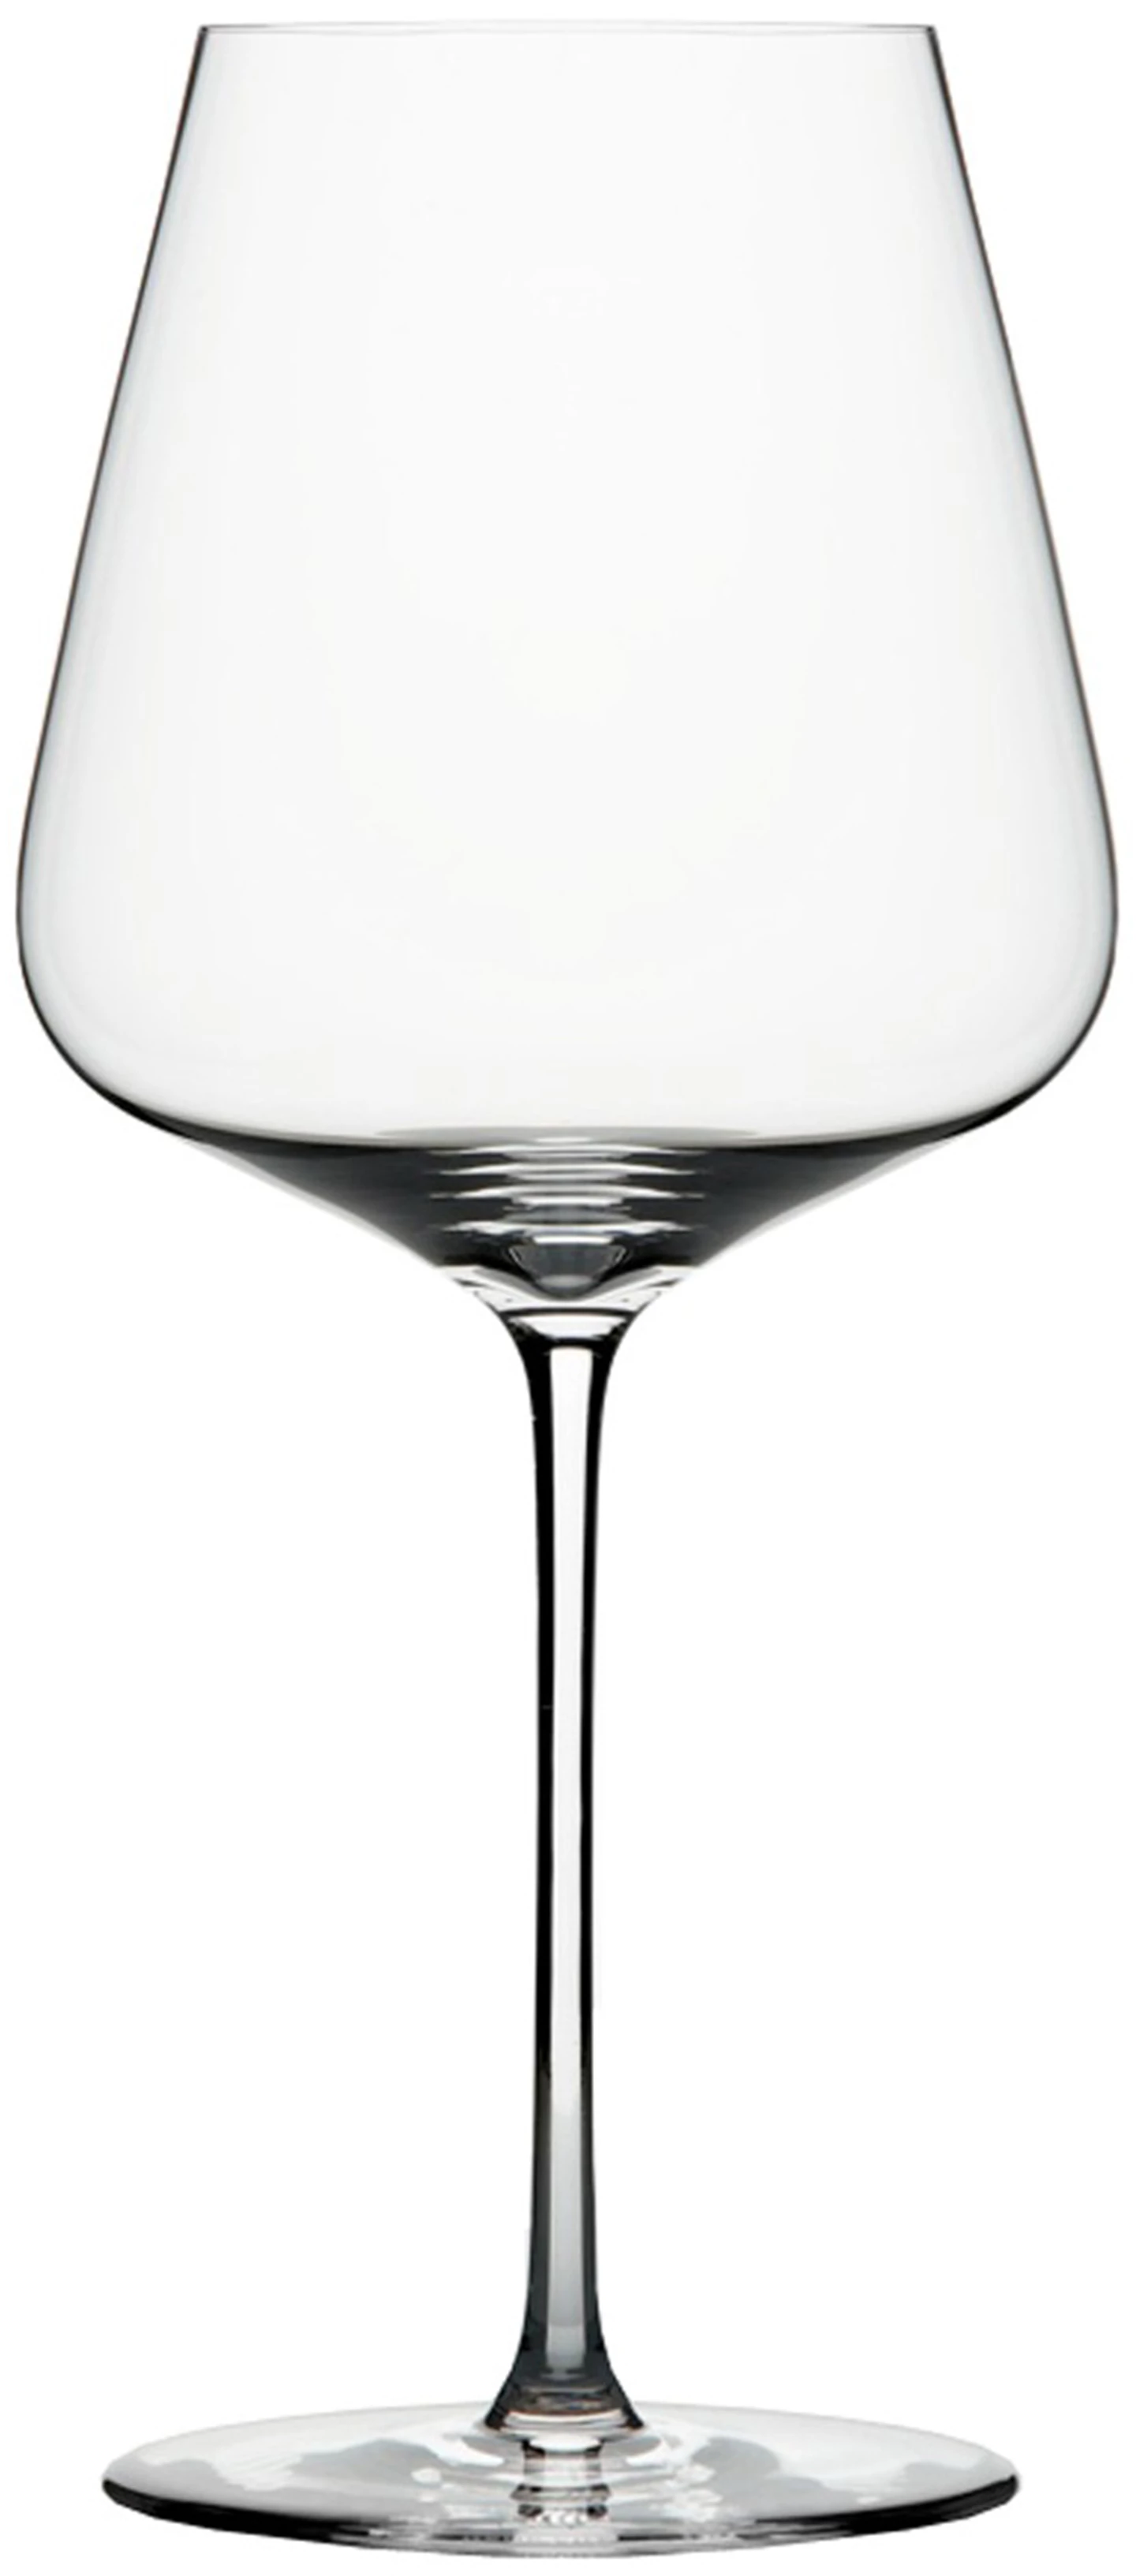 Løgismose Grej Zalto Glasperfektion Bordeauxglas - 2 stk - 133389